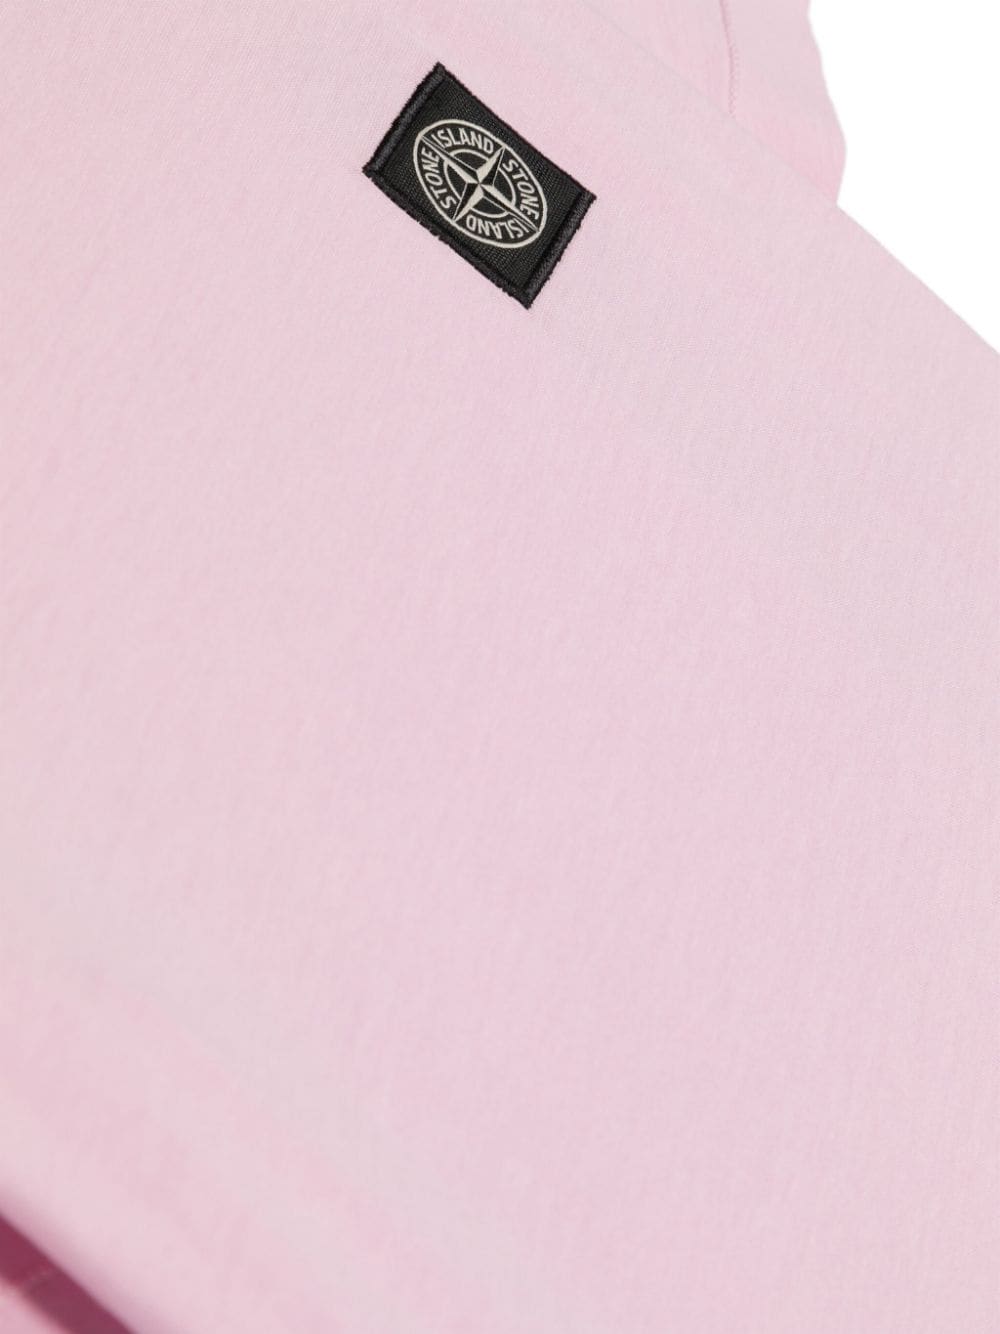 T-shirt rosa unisex